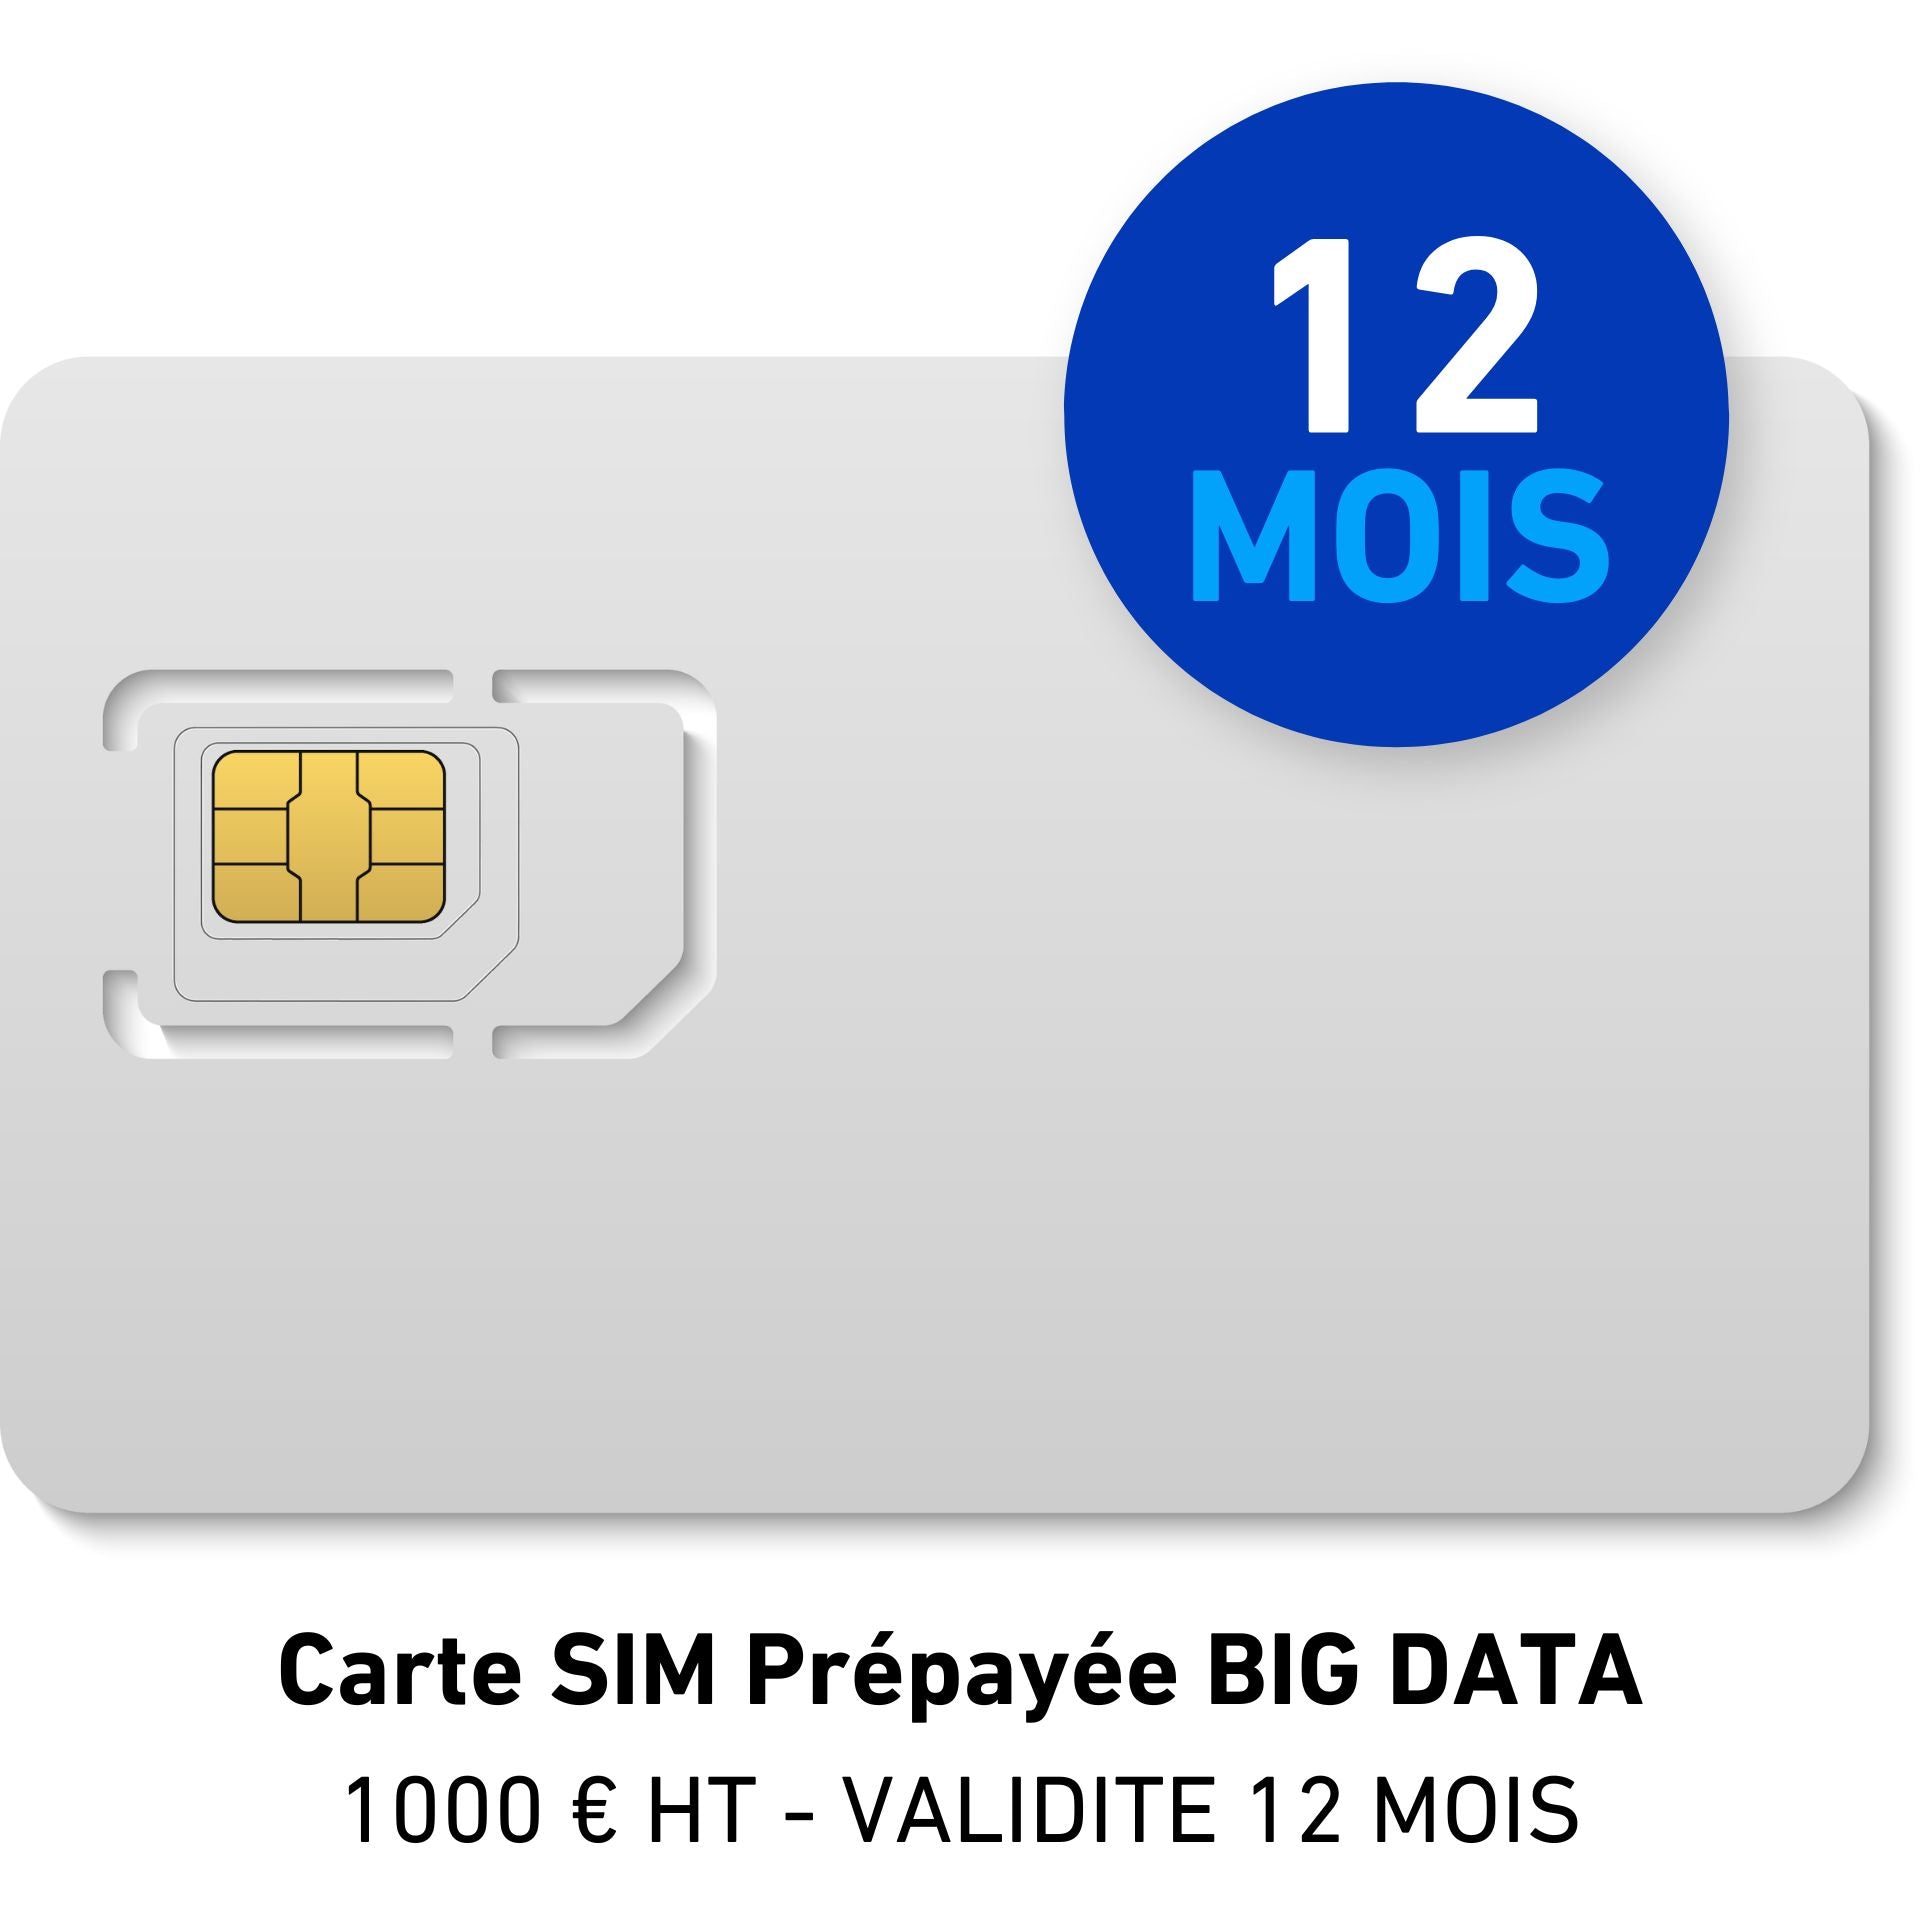 BIG DATA prepaid SIM card 1000 € HT - VALIDITY 12 MONTHS